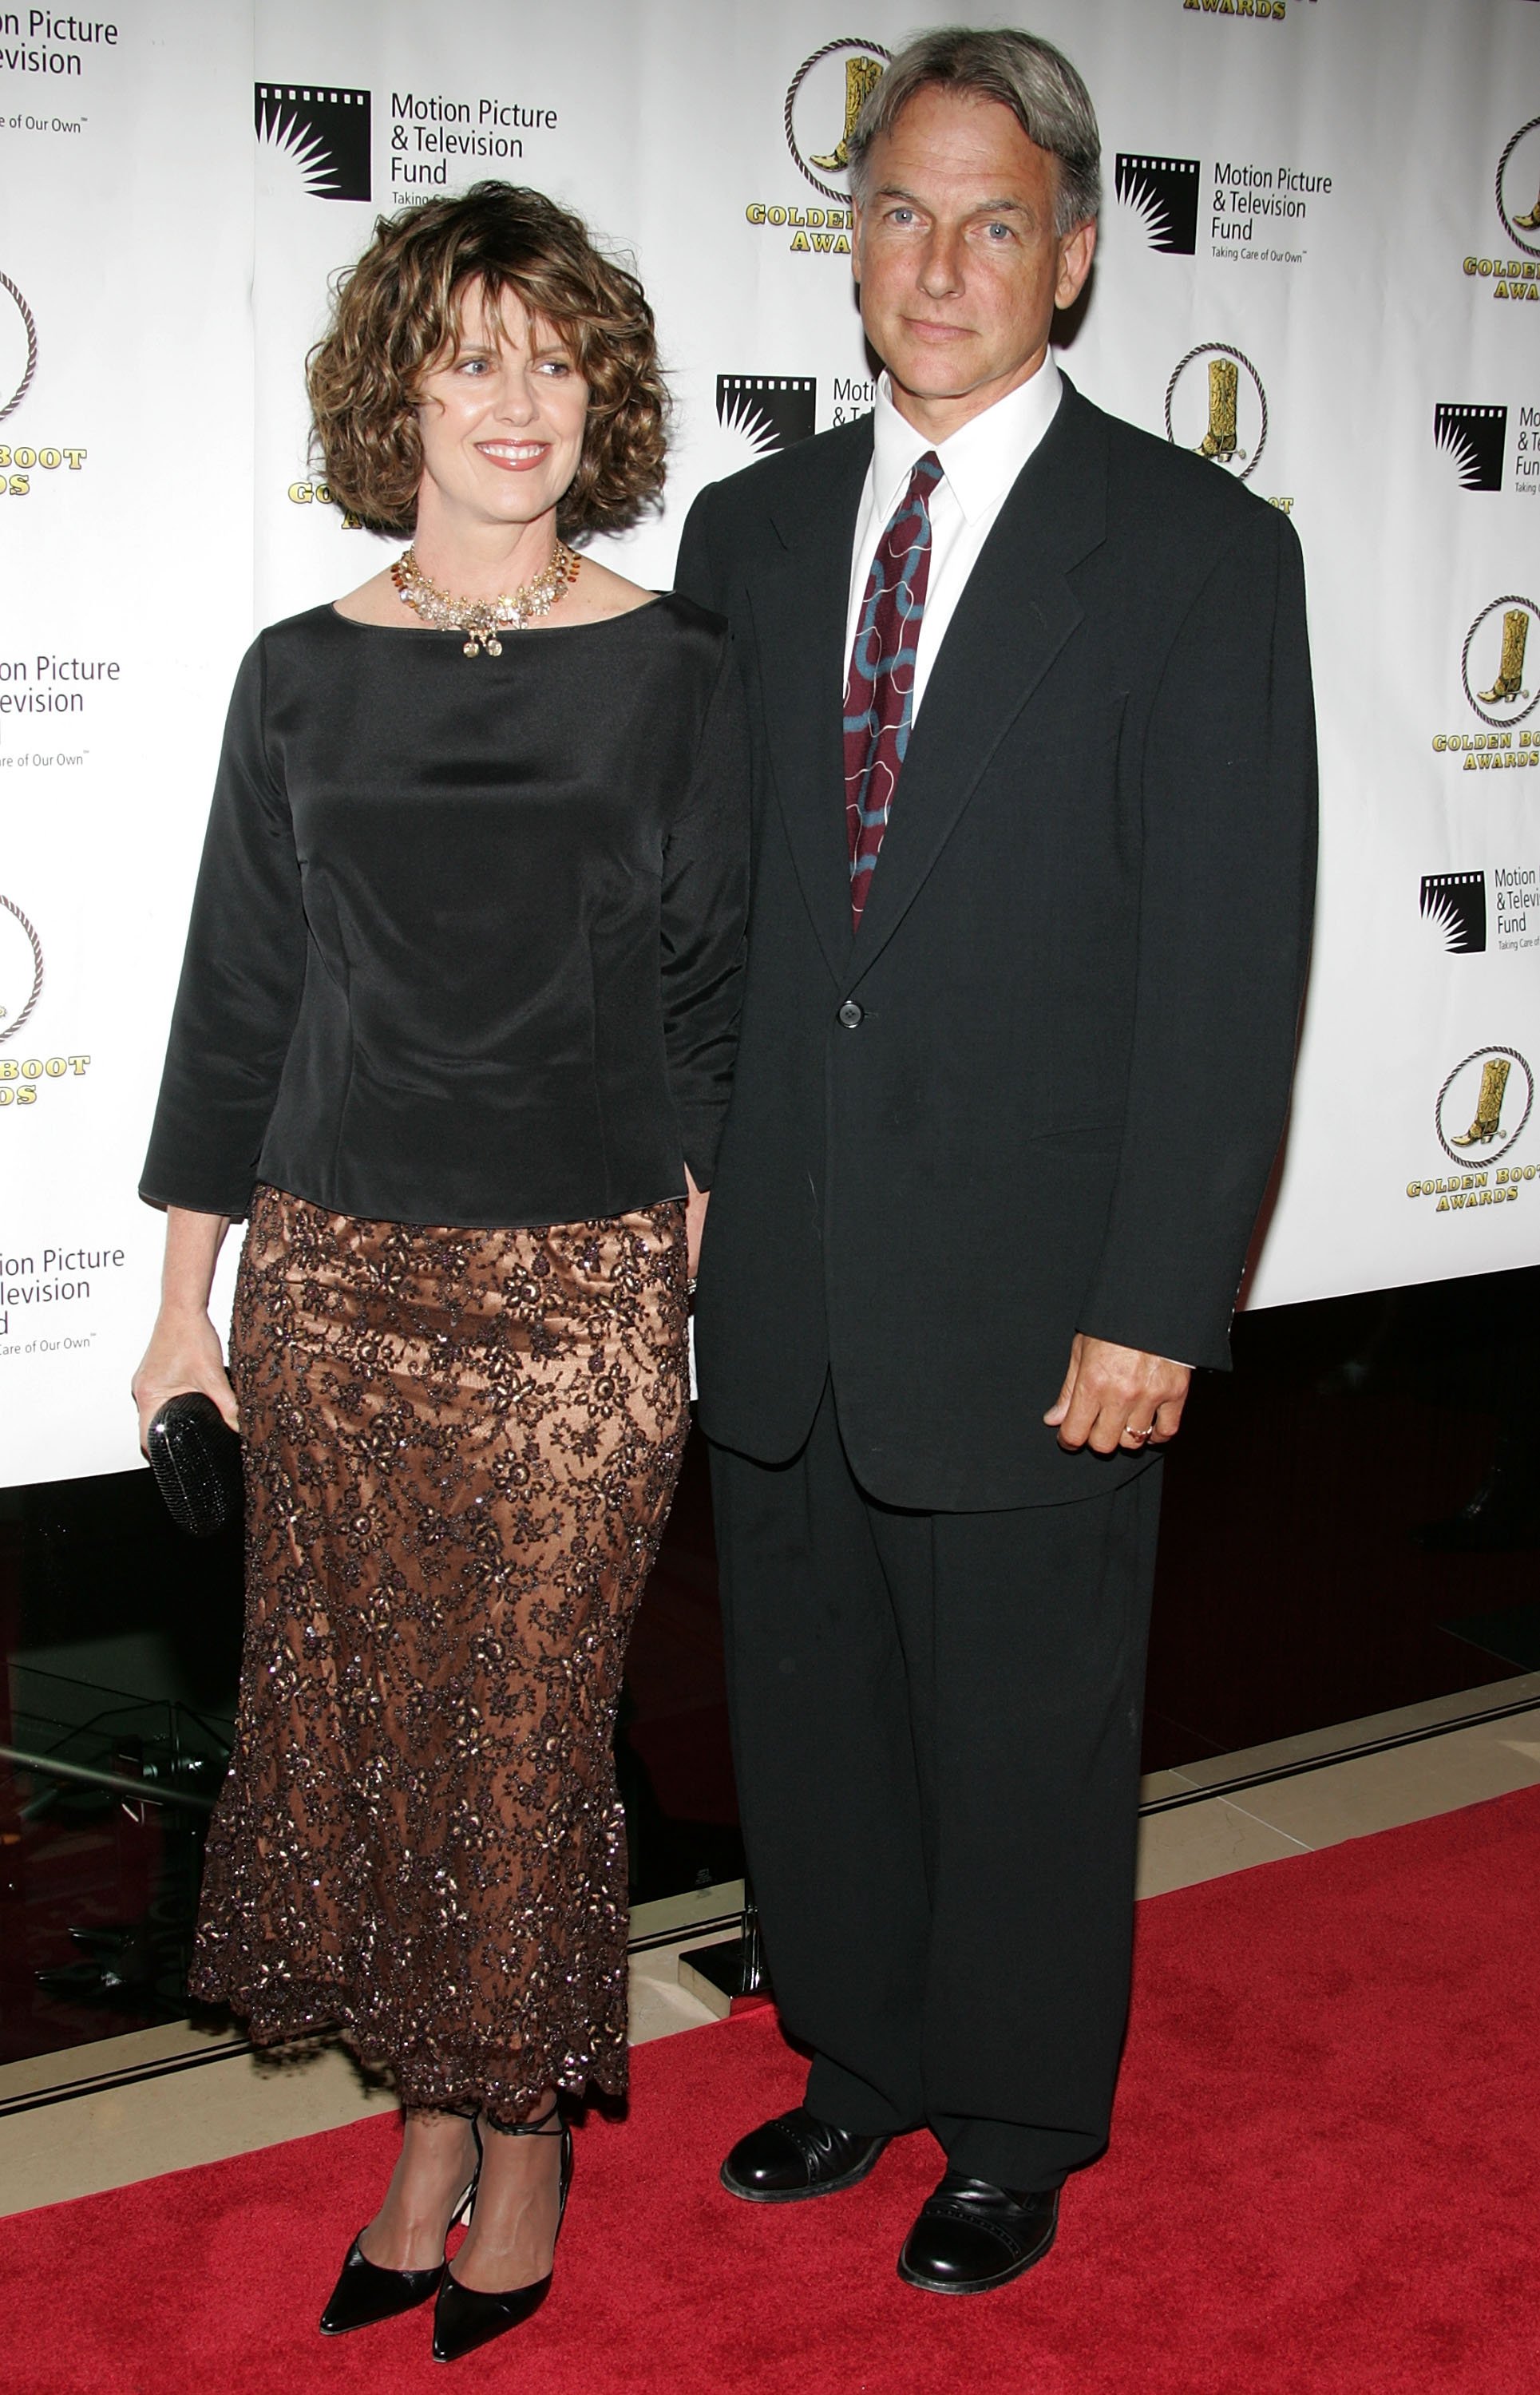 NCIS star Mark Harmon and Pam Dawber